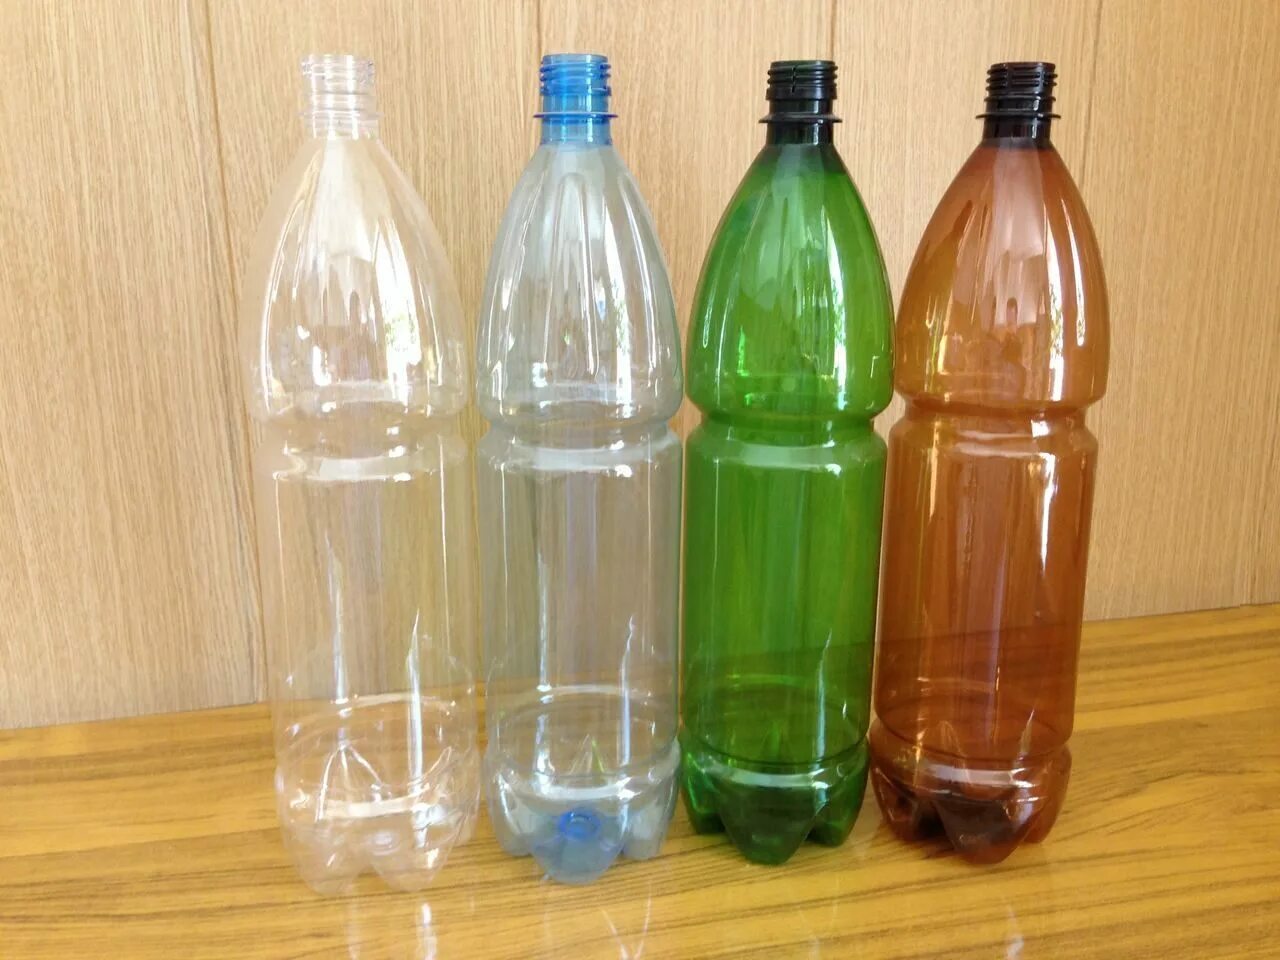 Купить пустую пластиковую бутылку. Пластиковая бутылка. Пустая пластиковая бутылка. Первая пластиковая бутылка. Красивые пластиковые бутылки.